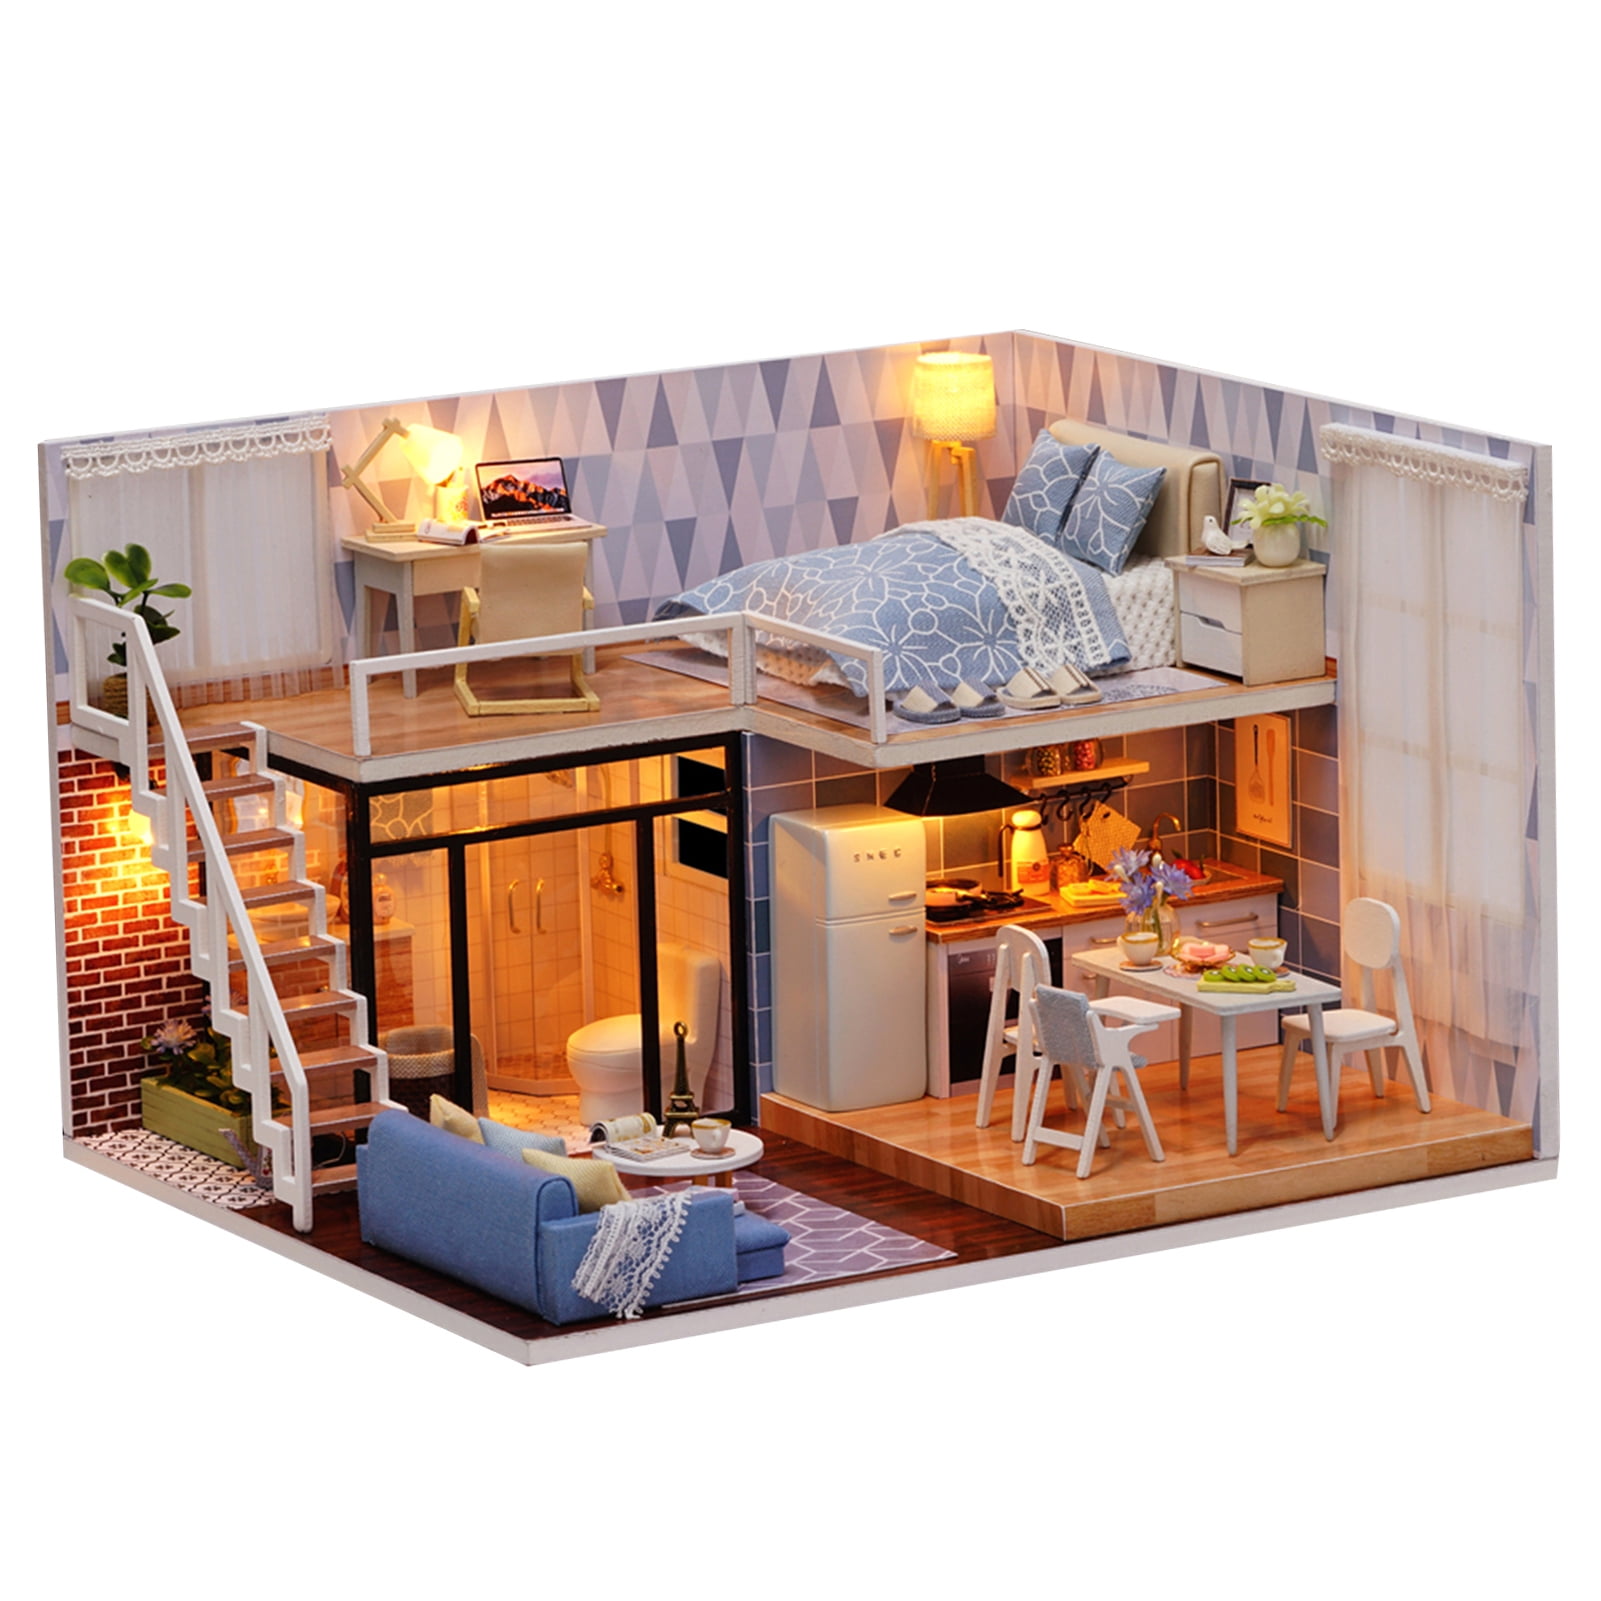 DIY Miniature Loft Dollhouse Kit Lifelike 3D Wooden House Room Handmade  with Furniture Lights Valentine's Day Christmas Birthday Gift 